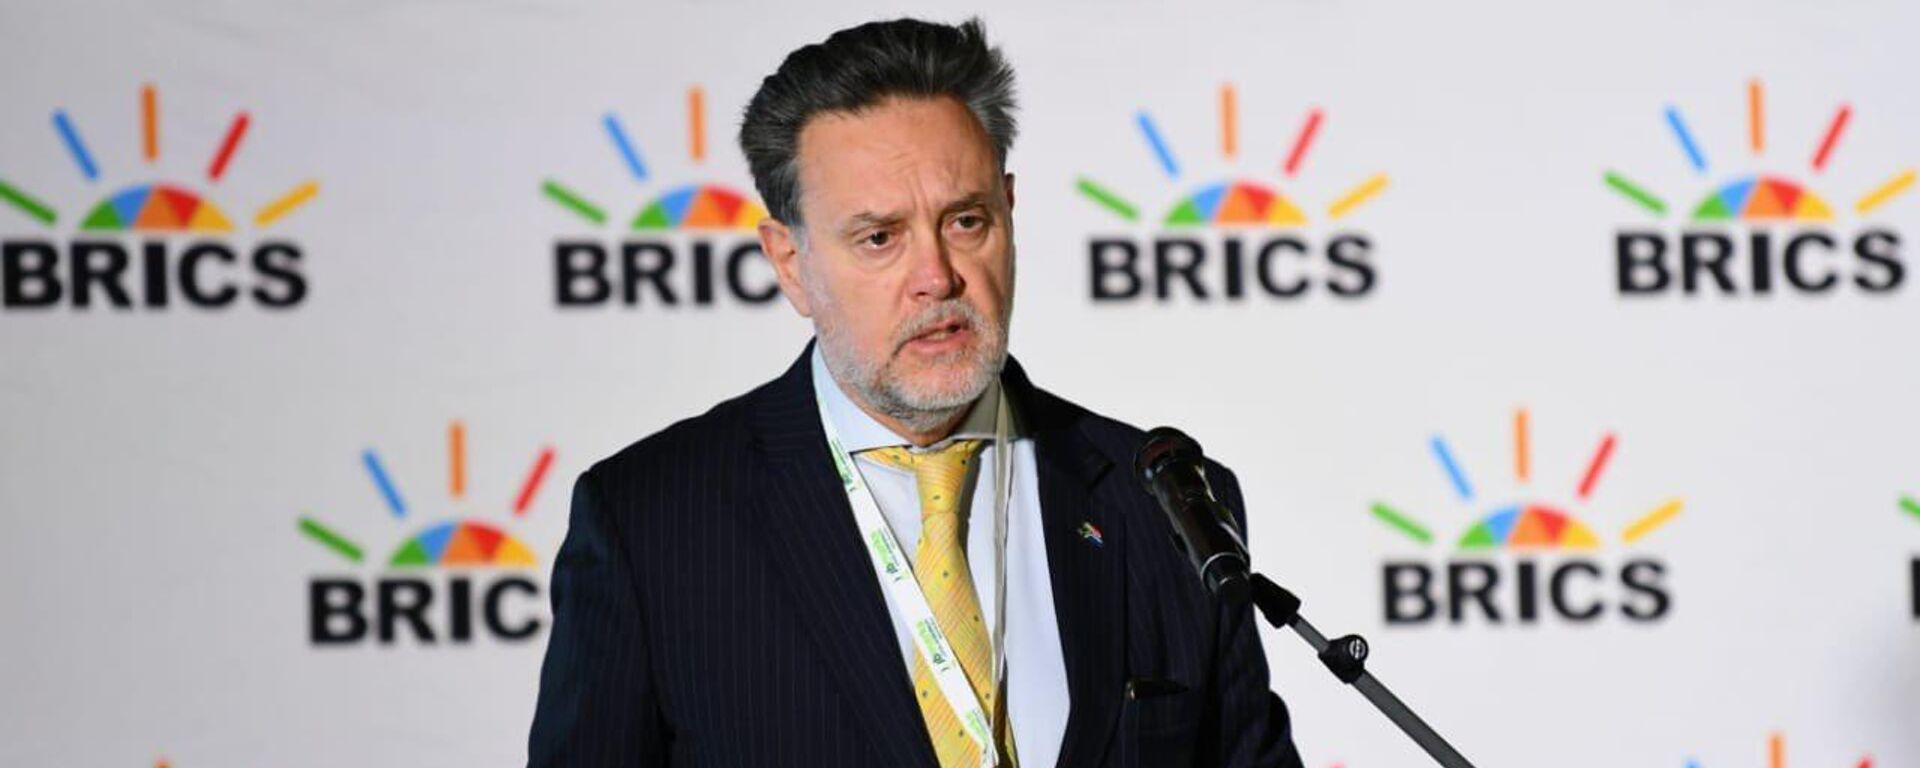 BRICS Sous-Sherpa for South Africa, Mr. Ben Joubert addressing the BRICS Roadshow and Sawubona Afrika conference in Potchefstroom, North West Province, South Africa.  - Sputnik Africa, 1920, 27.06.2023